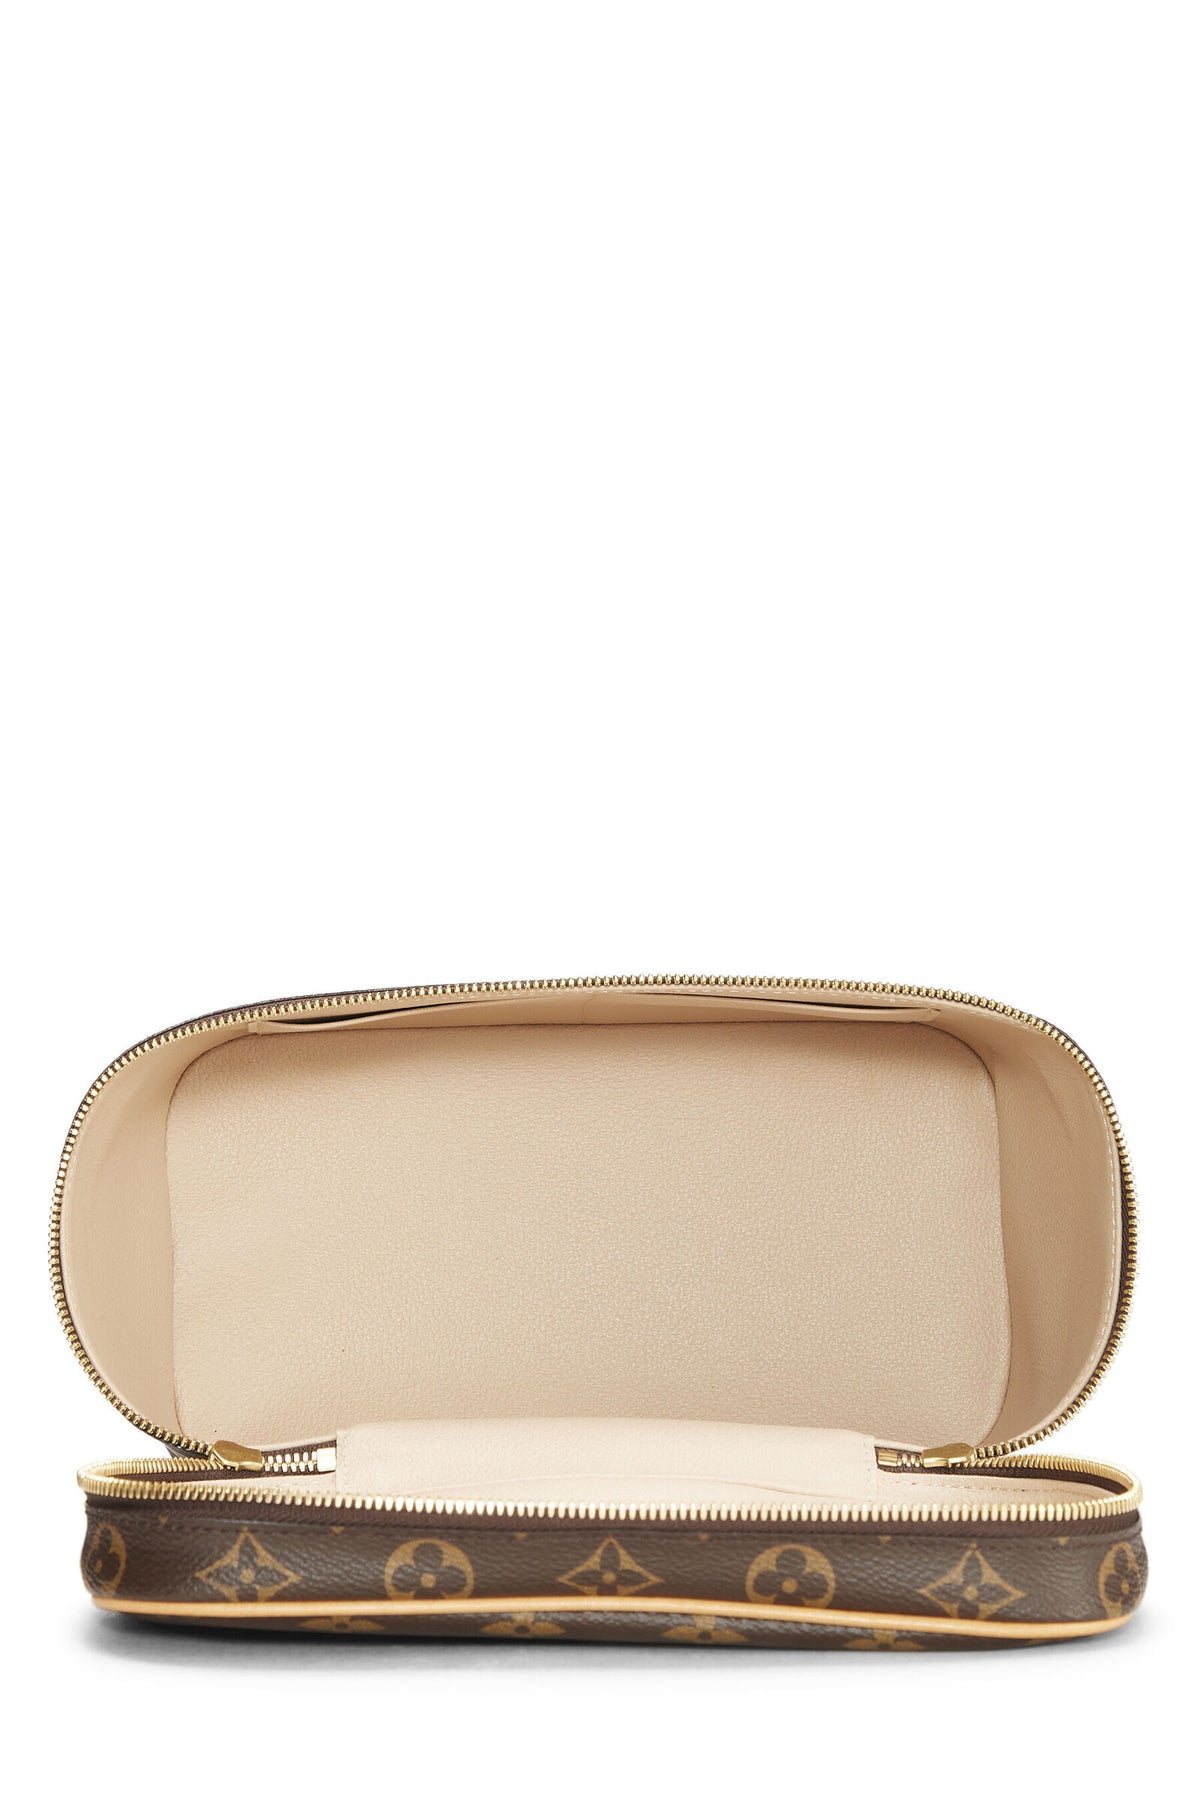 LOUIS VUITTON Louis Vuitton Monogram Implant Nice Vanity Handbag